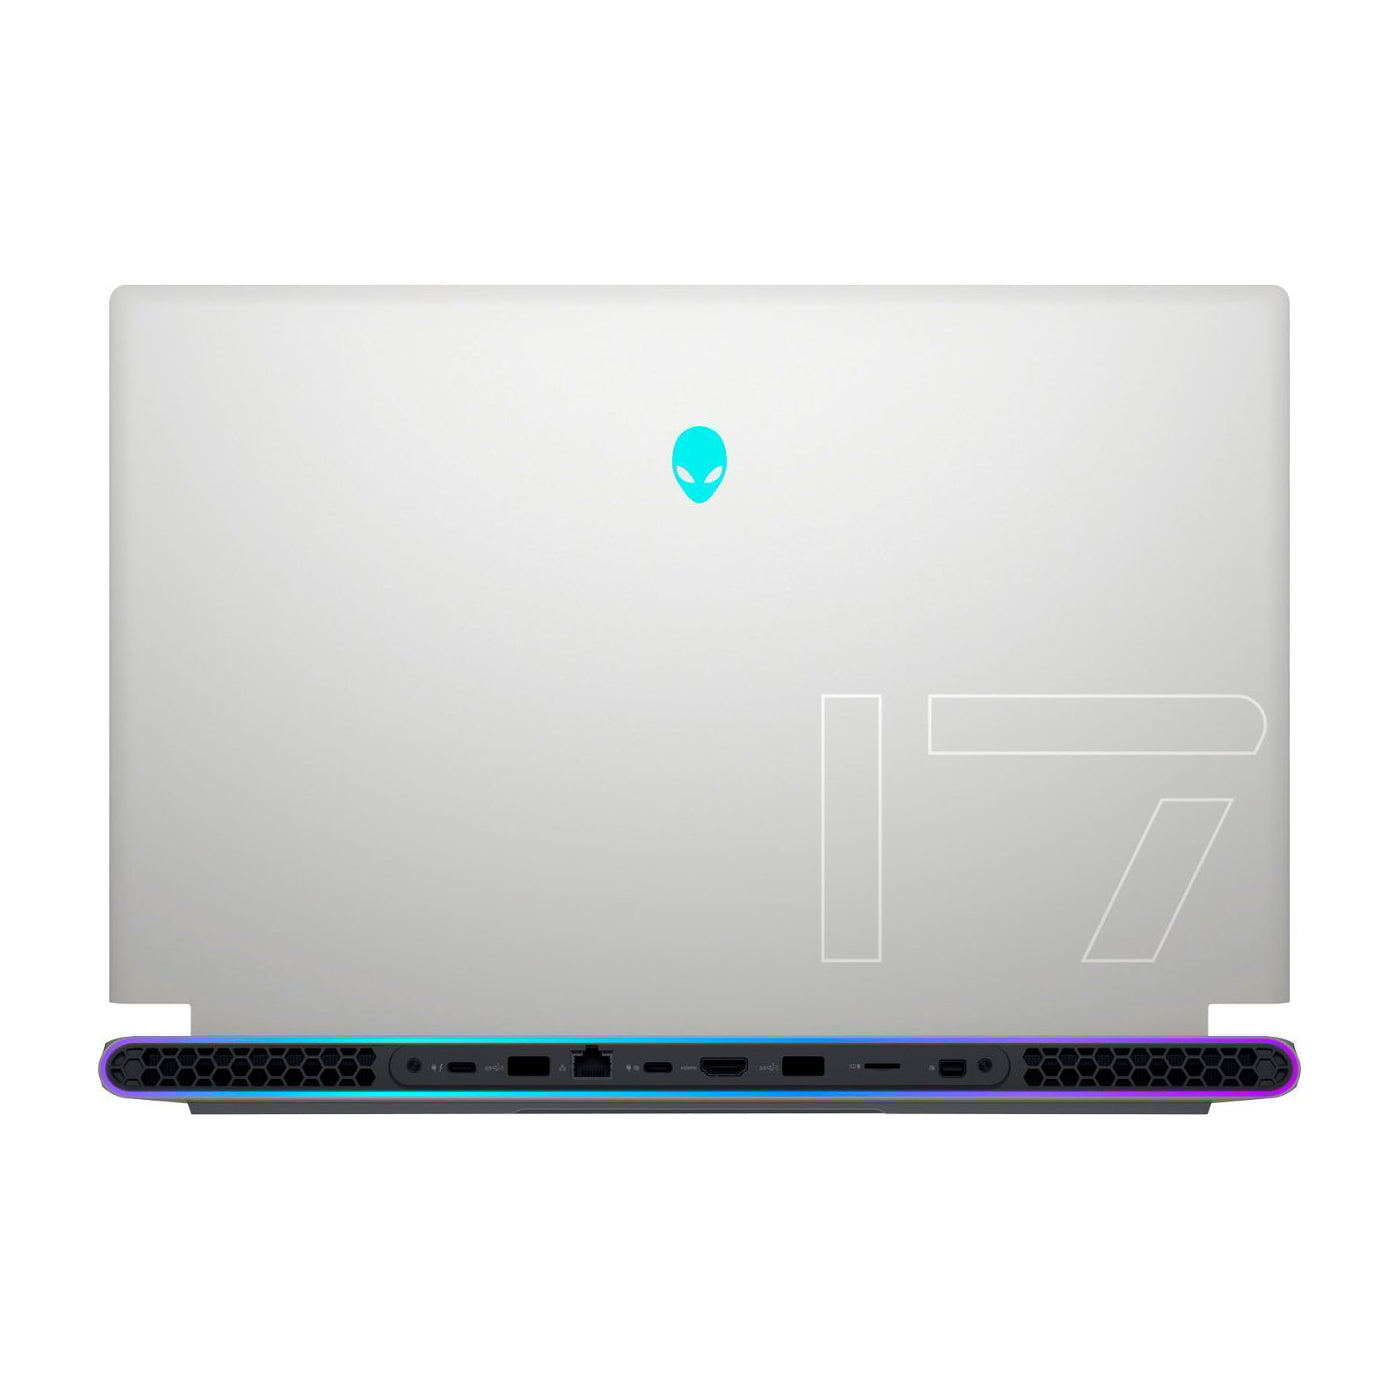 Alienware X17 R2 Core i9-12900hk Rtx 3080 Ti 480HZ 17.3" RGB Gaming Laptop Offers (New OB)